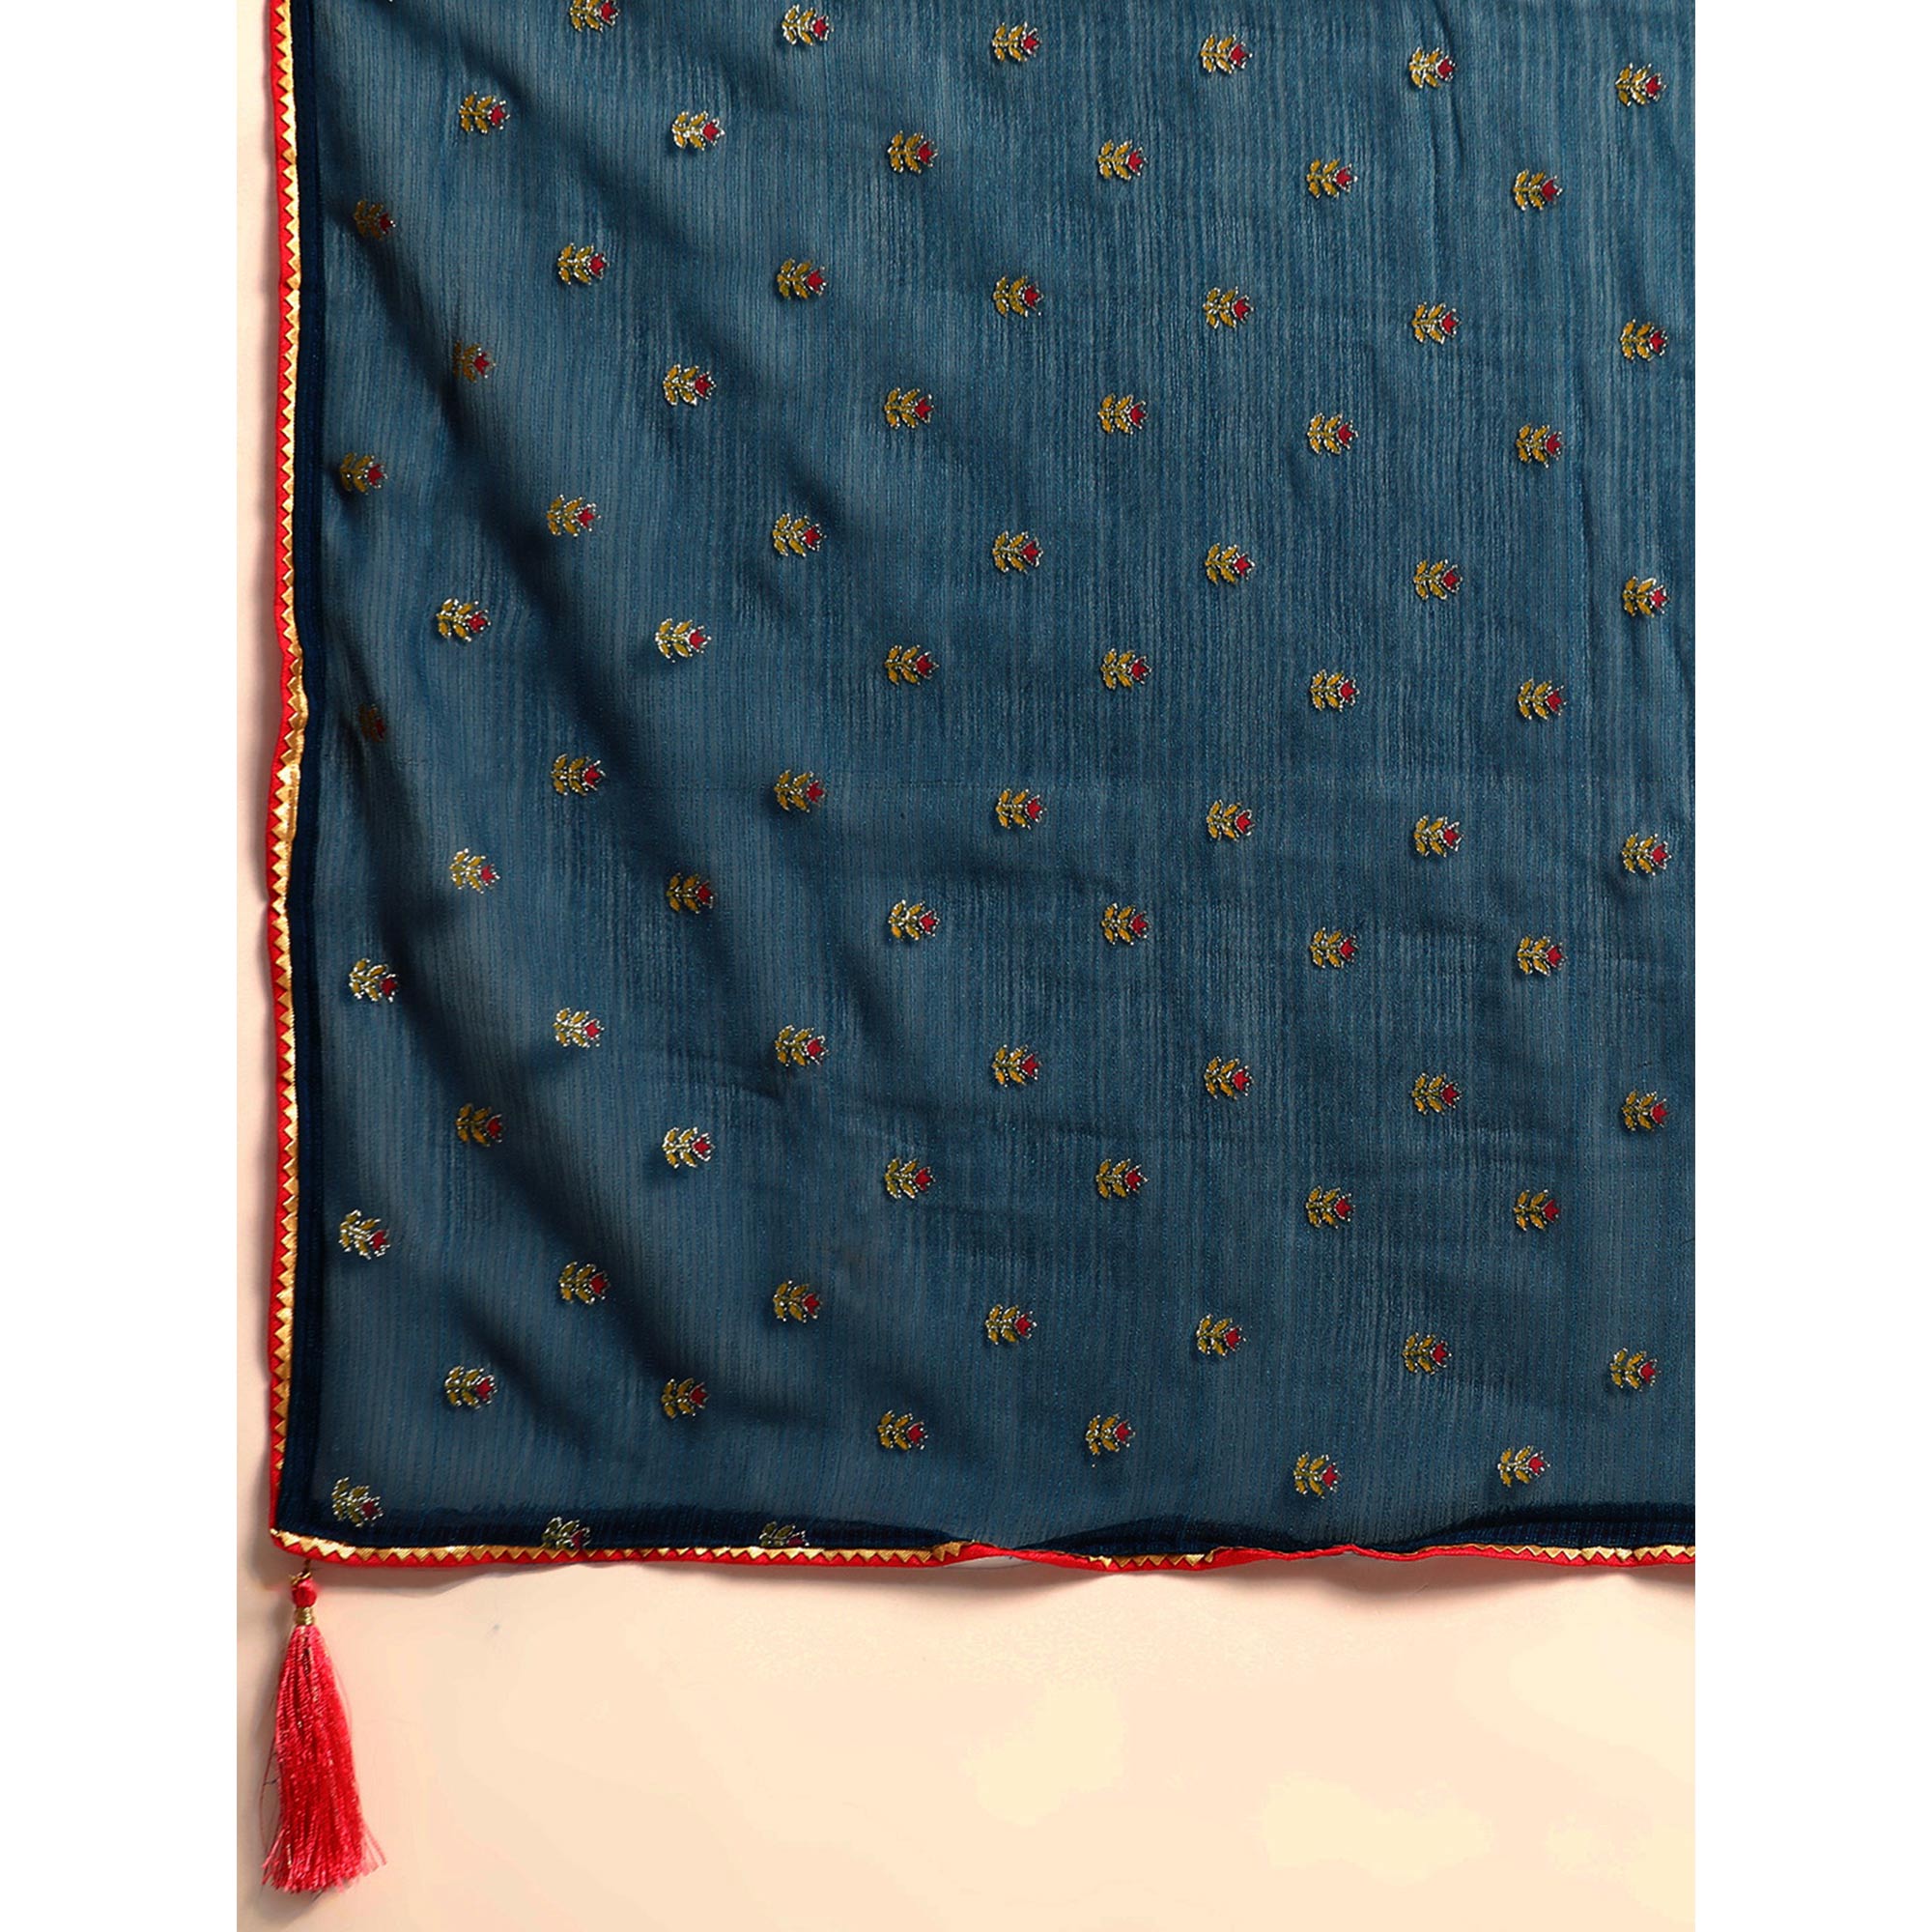 Teal Blue Embroidered Chiffon Saree